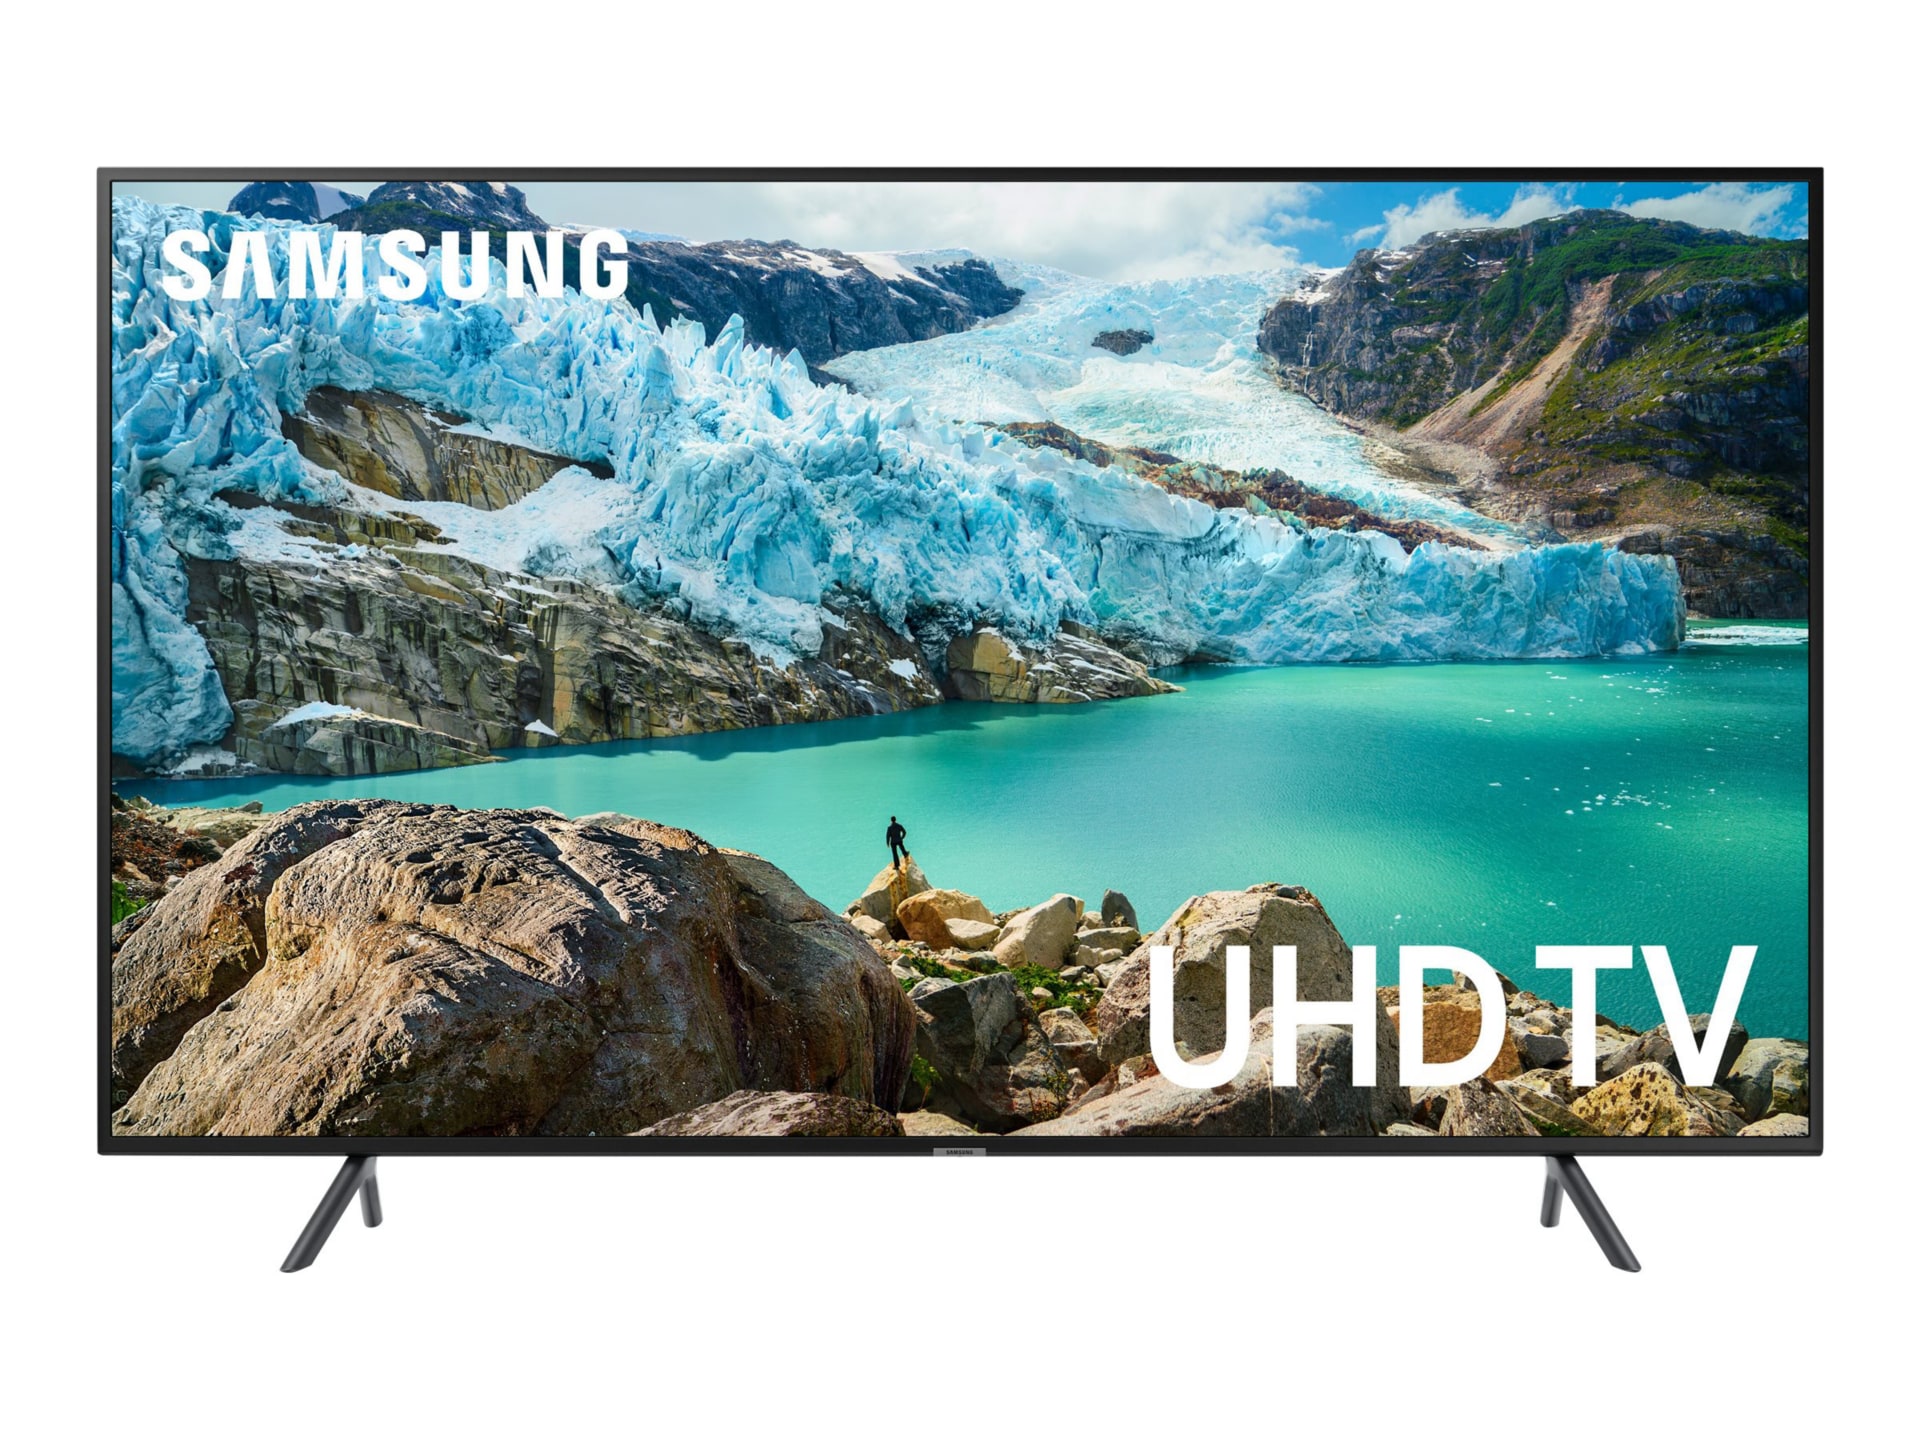 Samsung UN50RU7100F 7 Series - 50" Class (49.5" viewable) LED TV - 4K